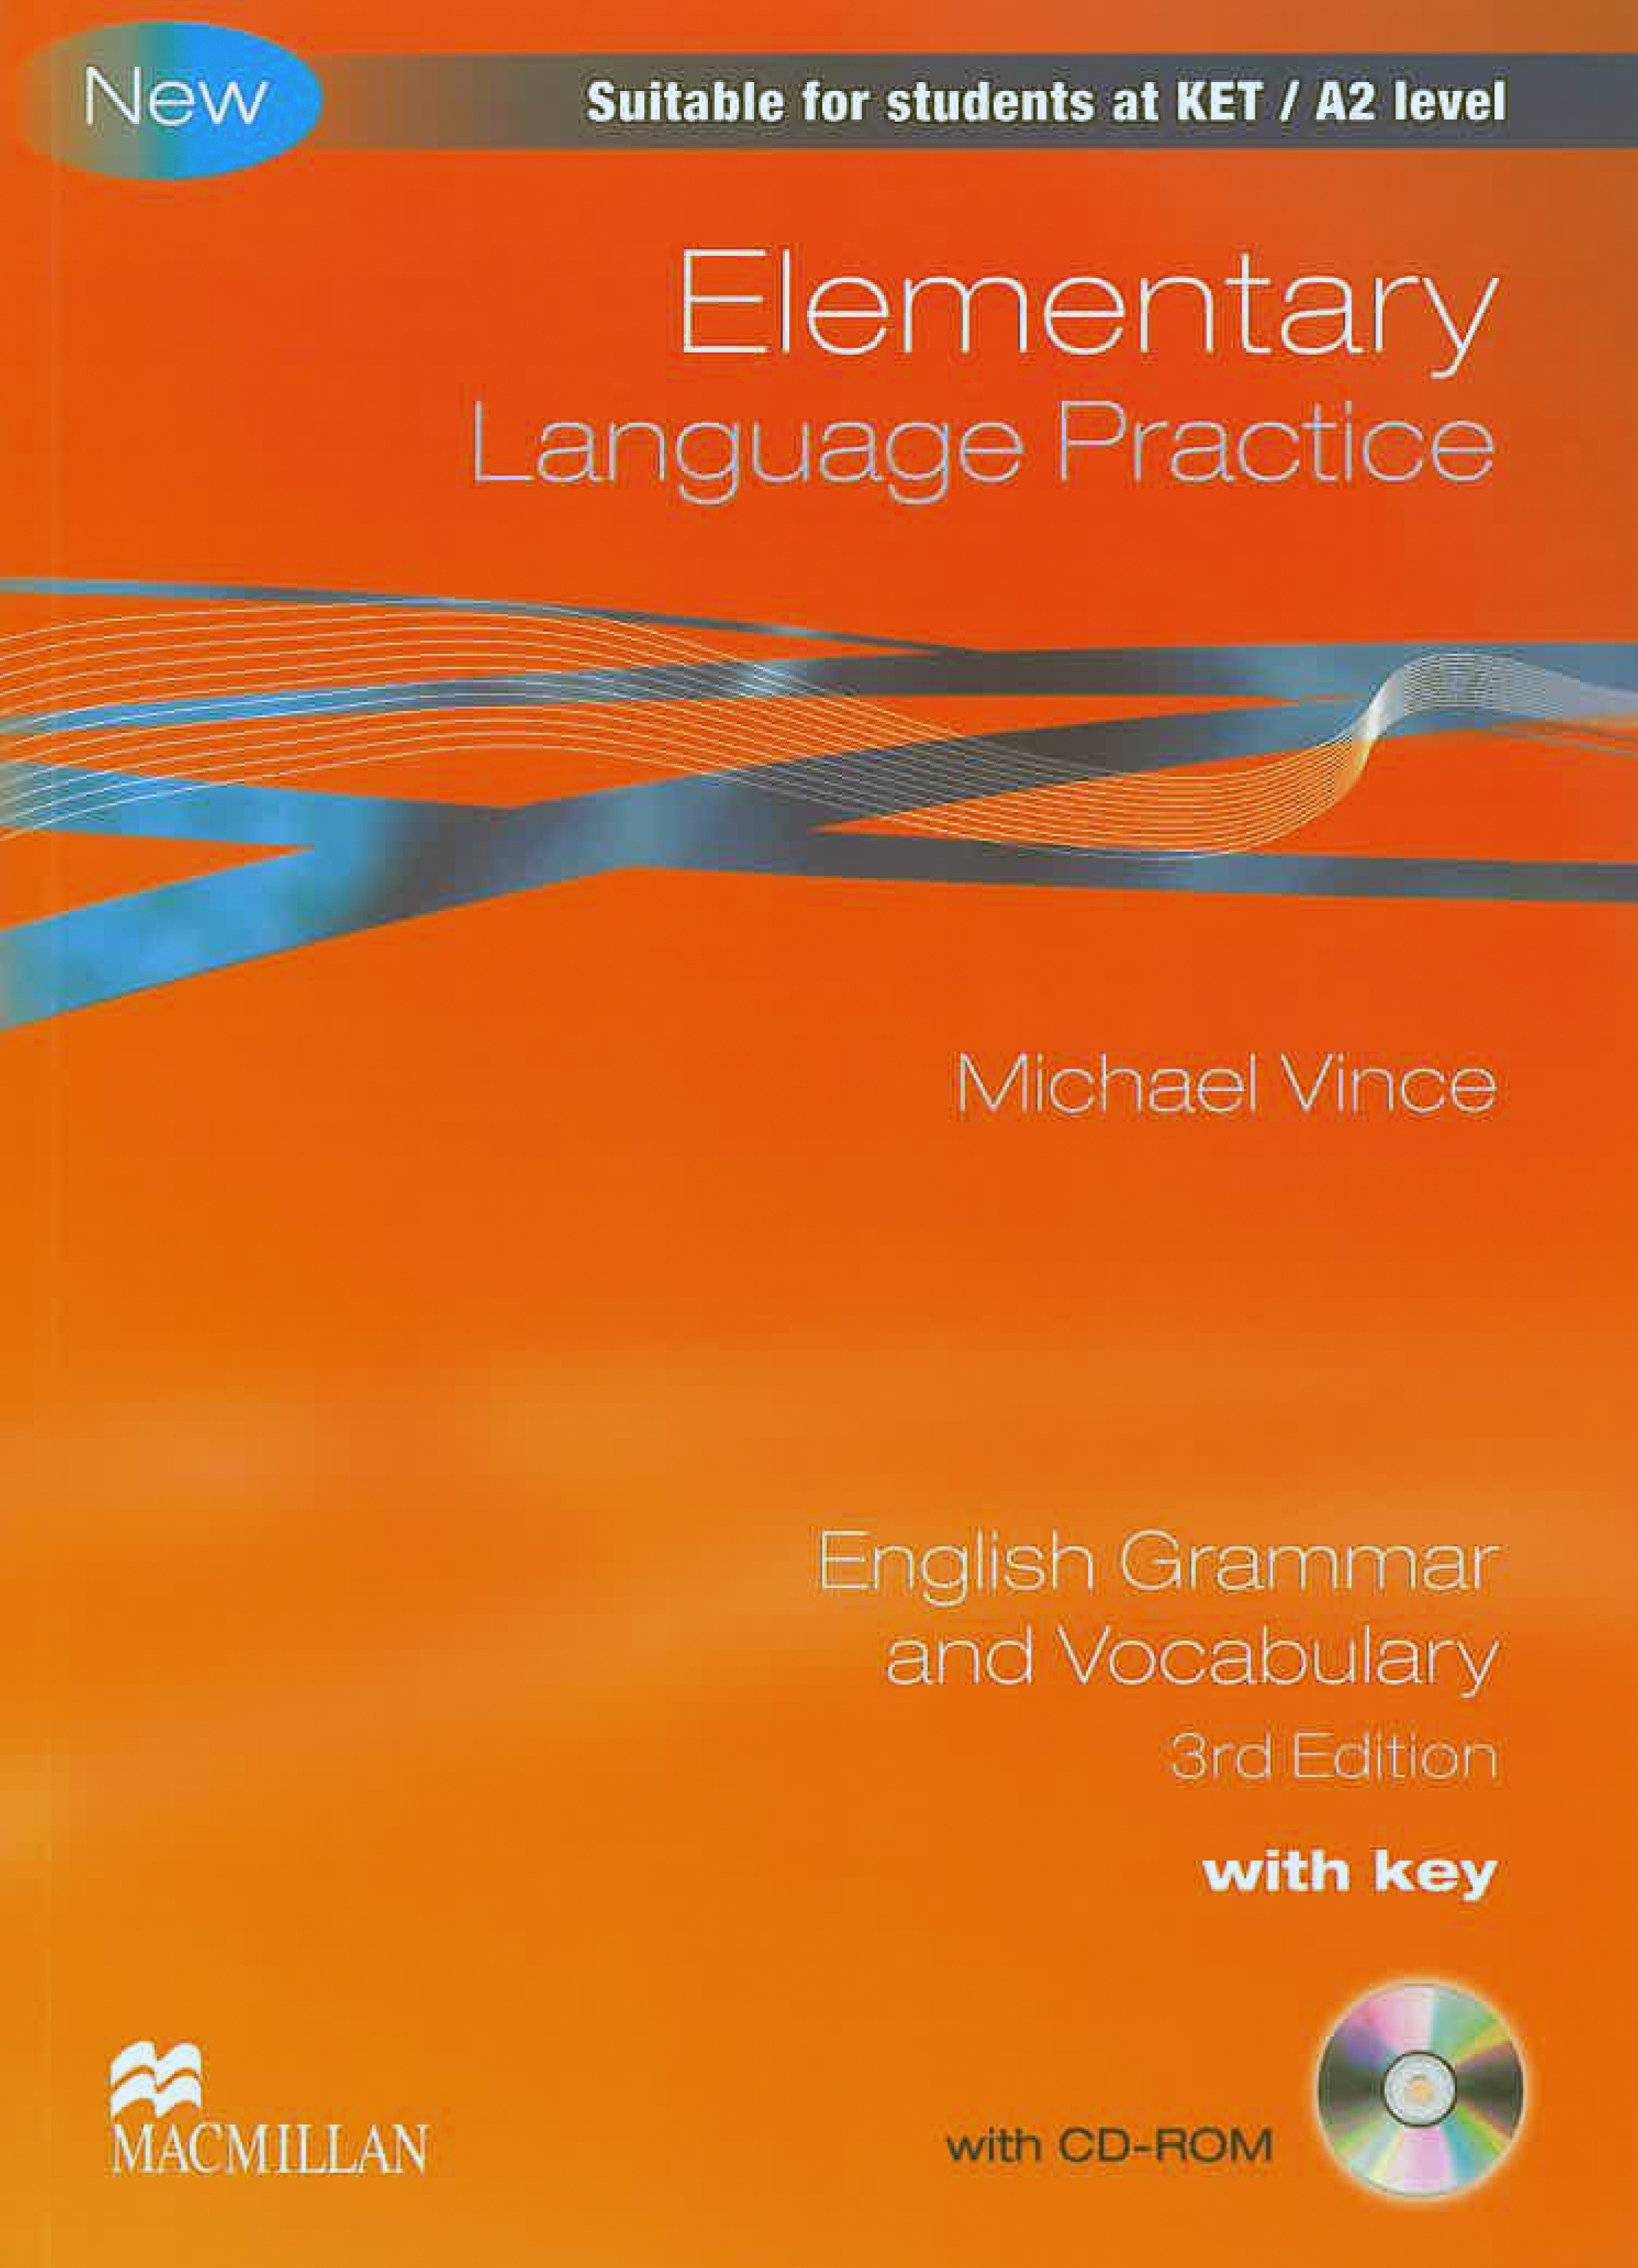 Elementary Language Practice (3rd Edition) + CD-ROM + key